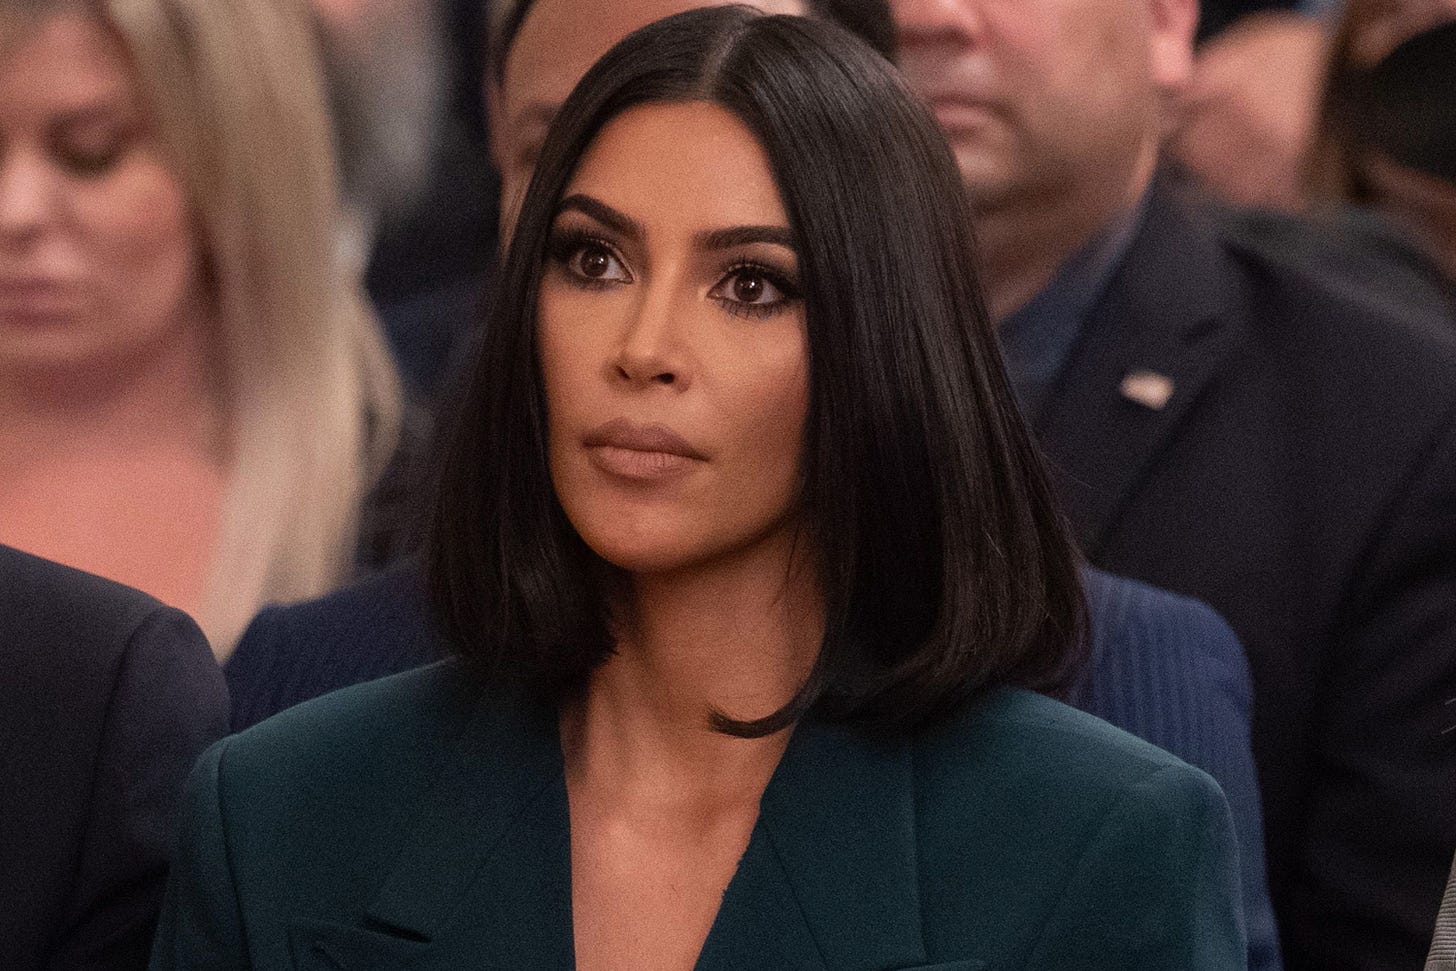 Where is Kim Kardashian going to law school?